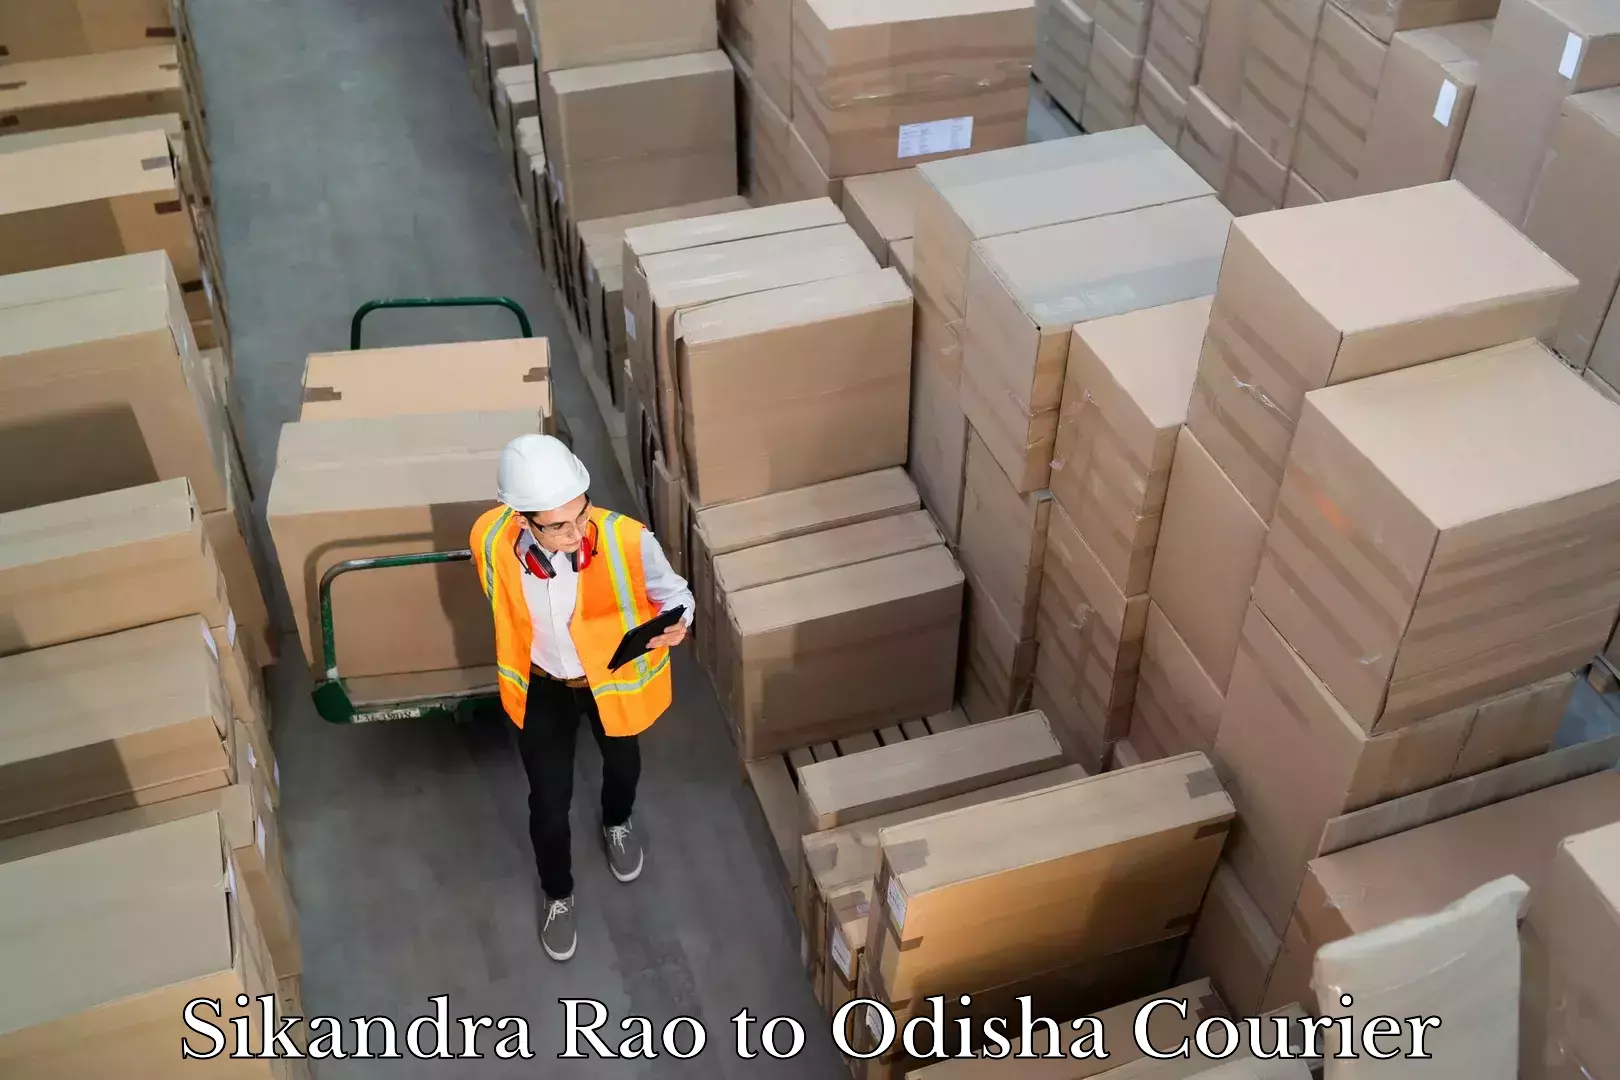 Courier service comparison Sikandra Rao to Odisha